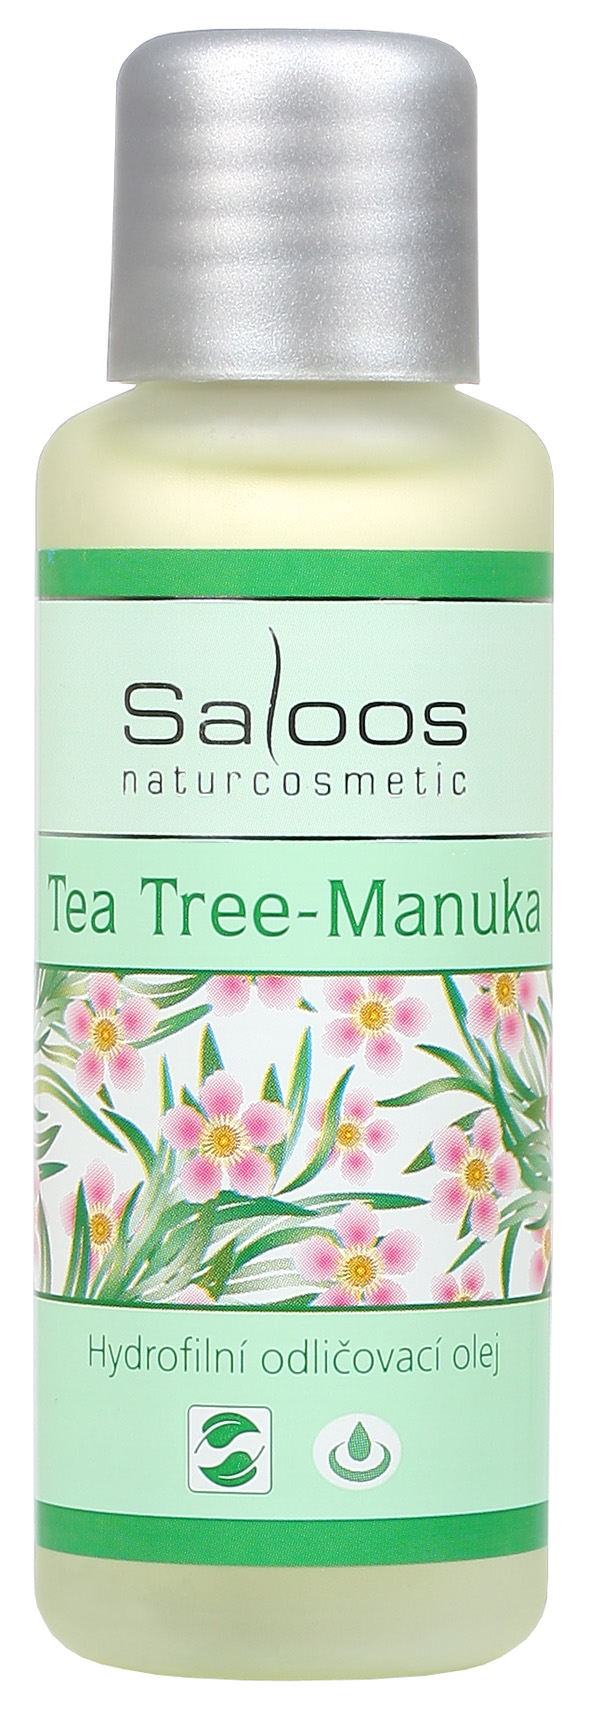 Tea tree Manuka odličovací olej - Saloos Objem: 1000 ml